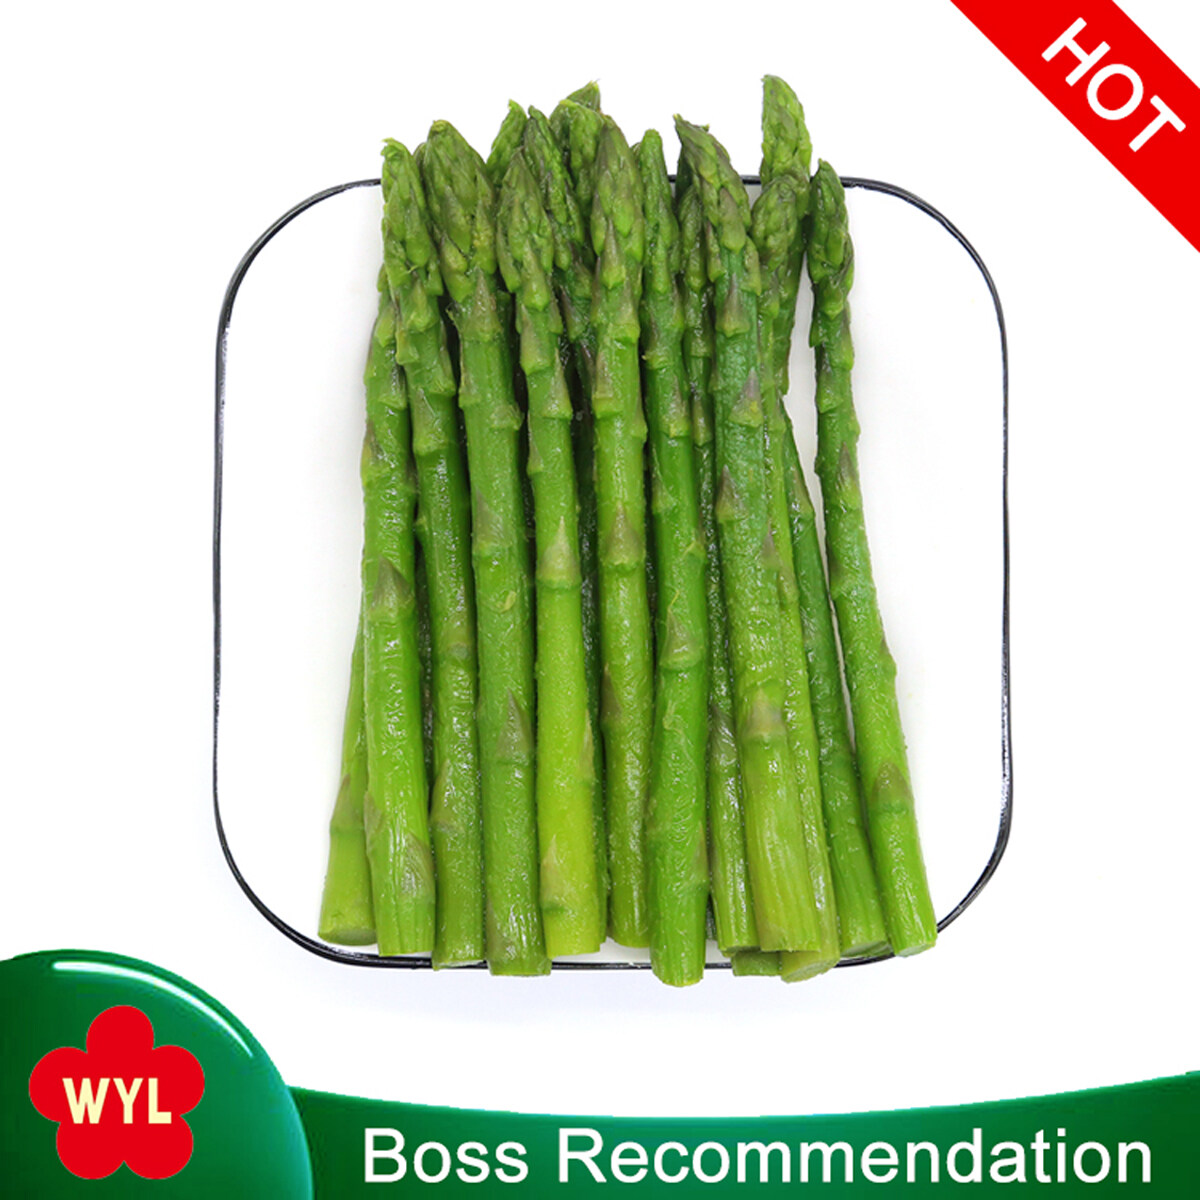 Ventas calientes Nuevas verduras congeladas IQF Frozen Green Asparagus Spears Origin China